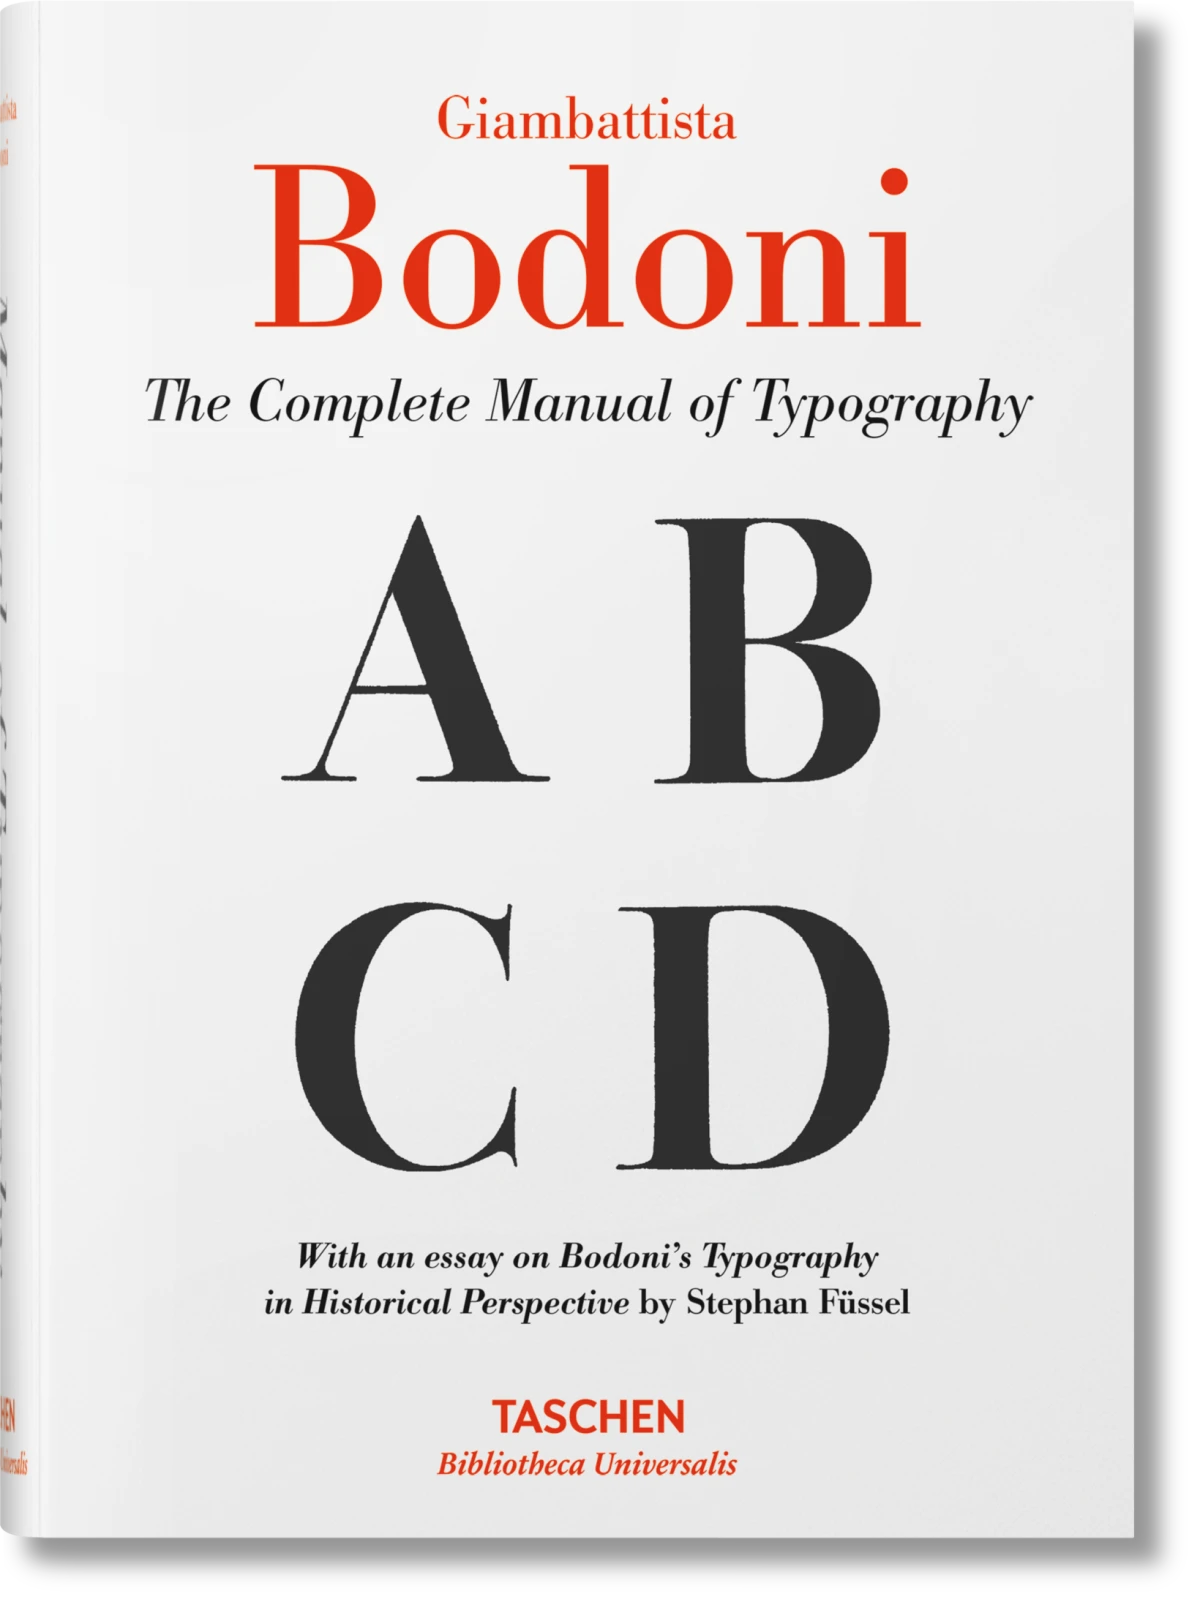 Giambattista Bodoni. Manuel typographique